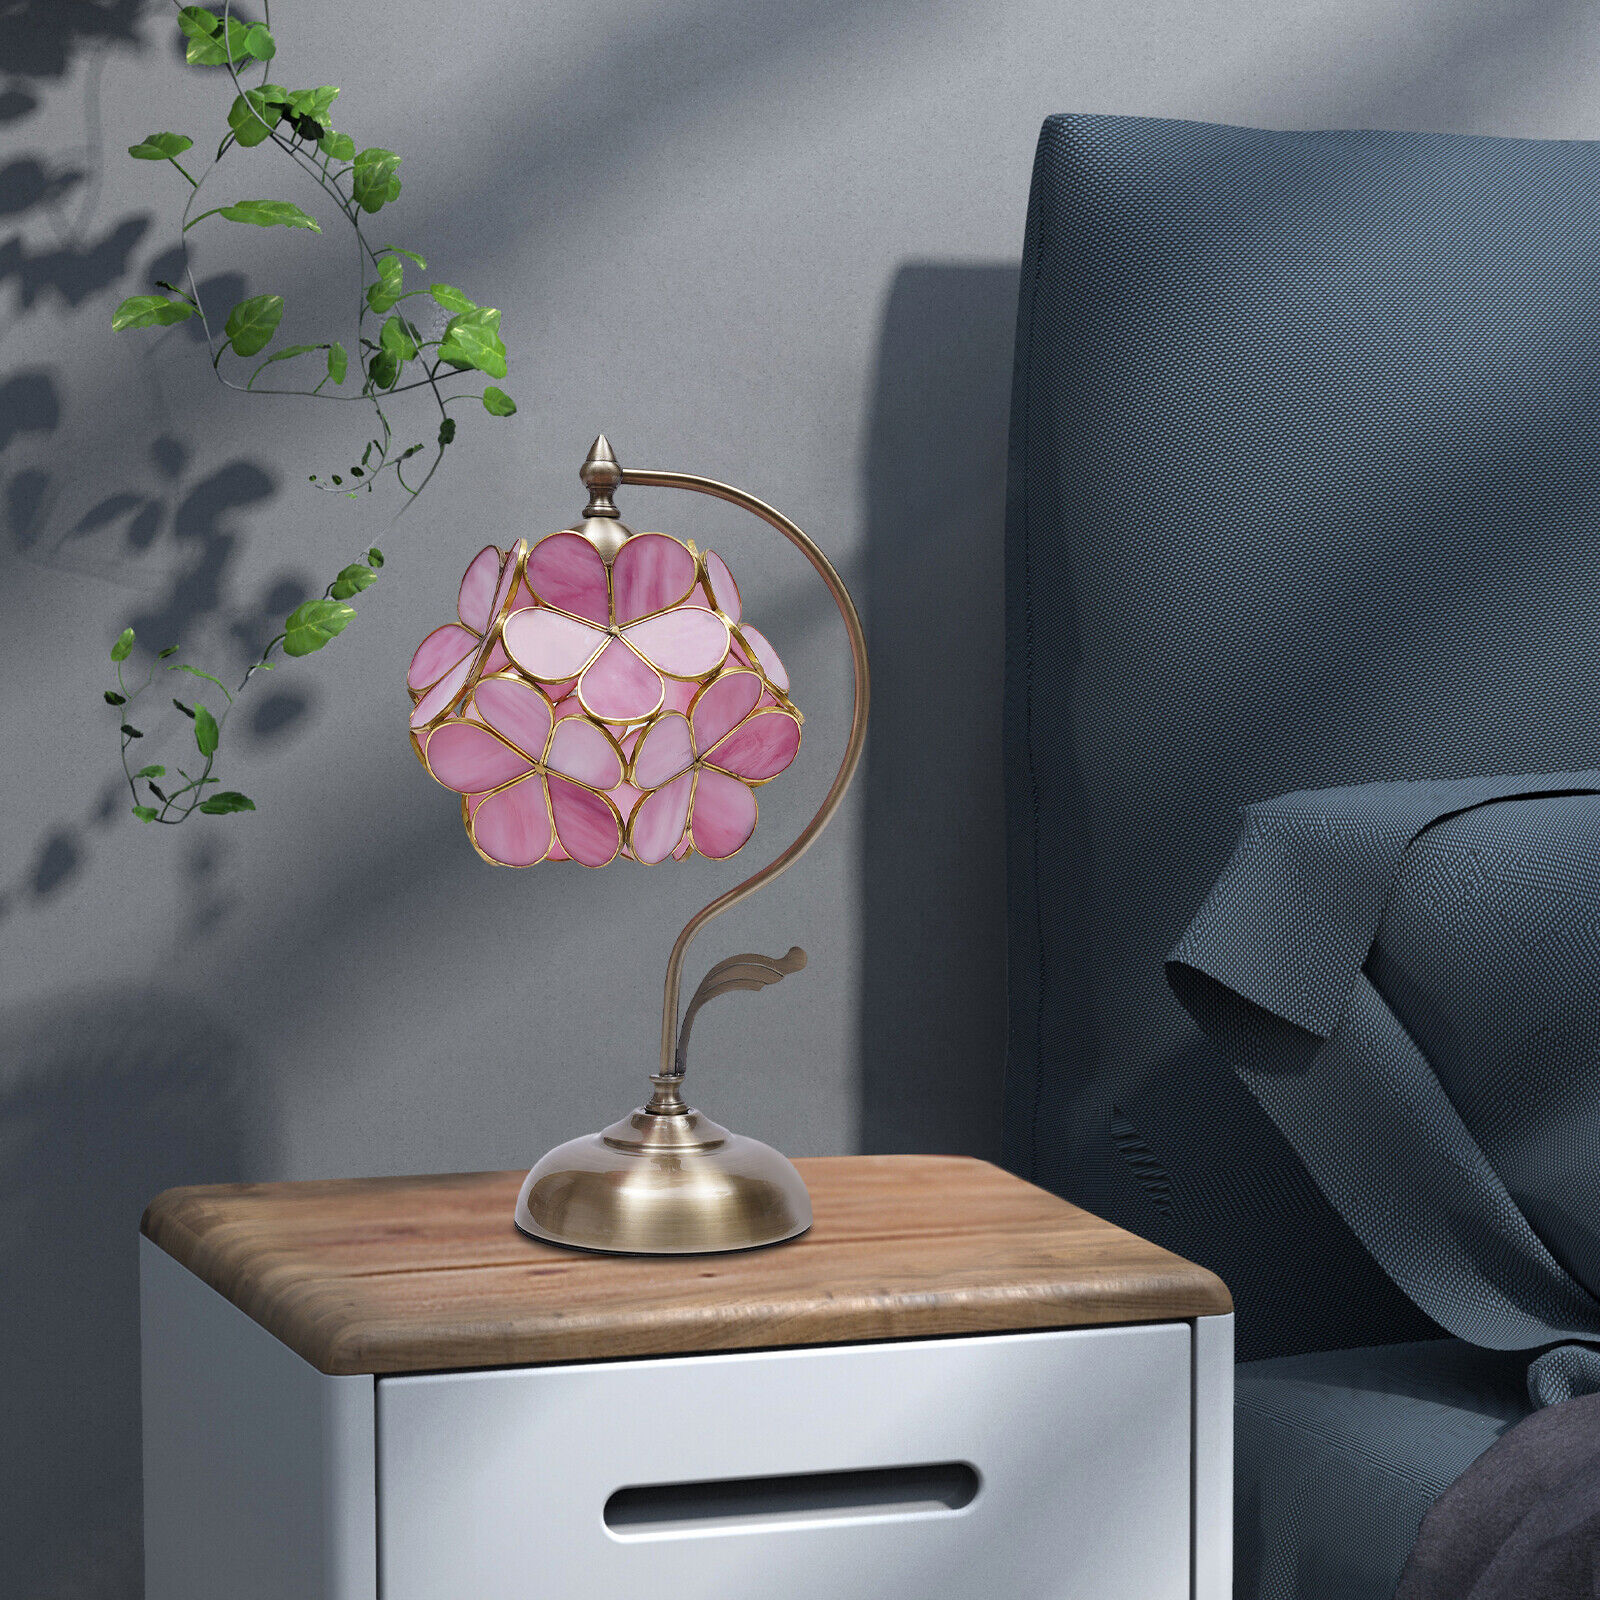 Stained Glass Flower Desk Lamp E27 Table Light Bedside Table Lamp Eye Protection